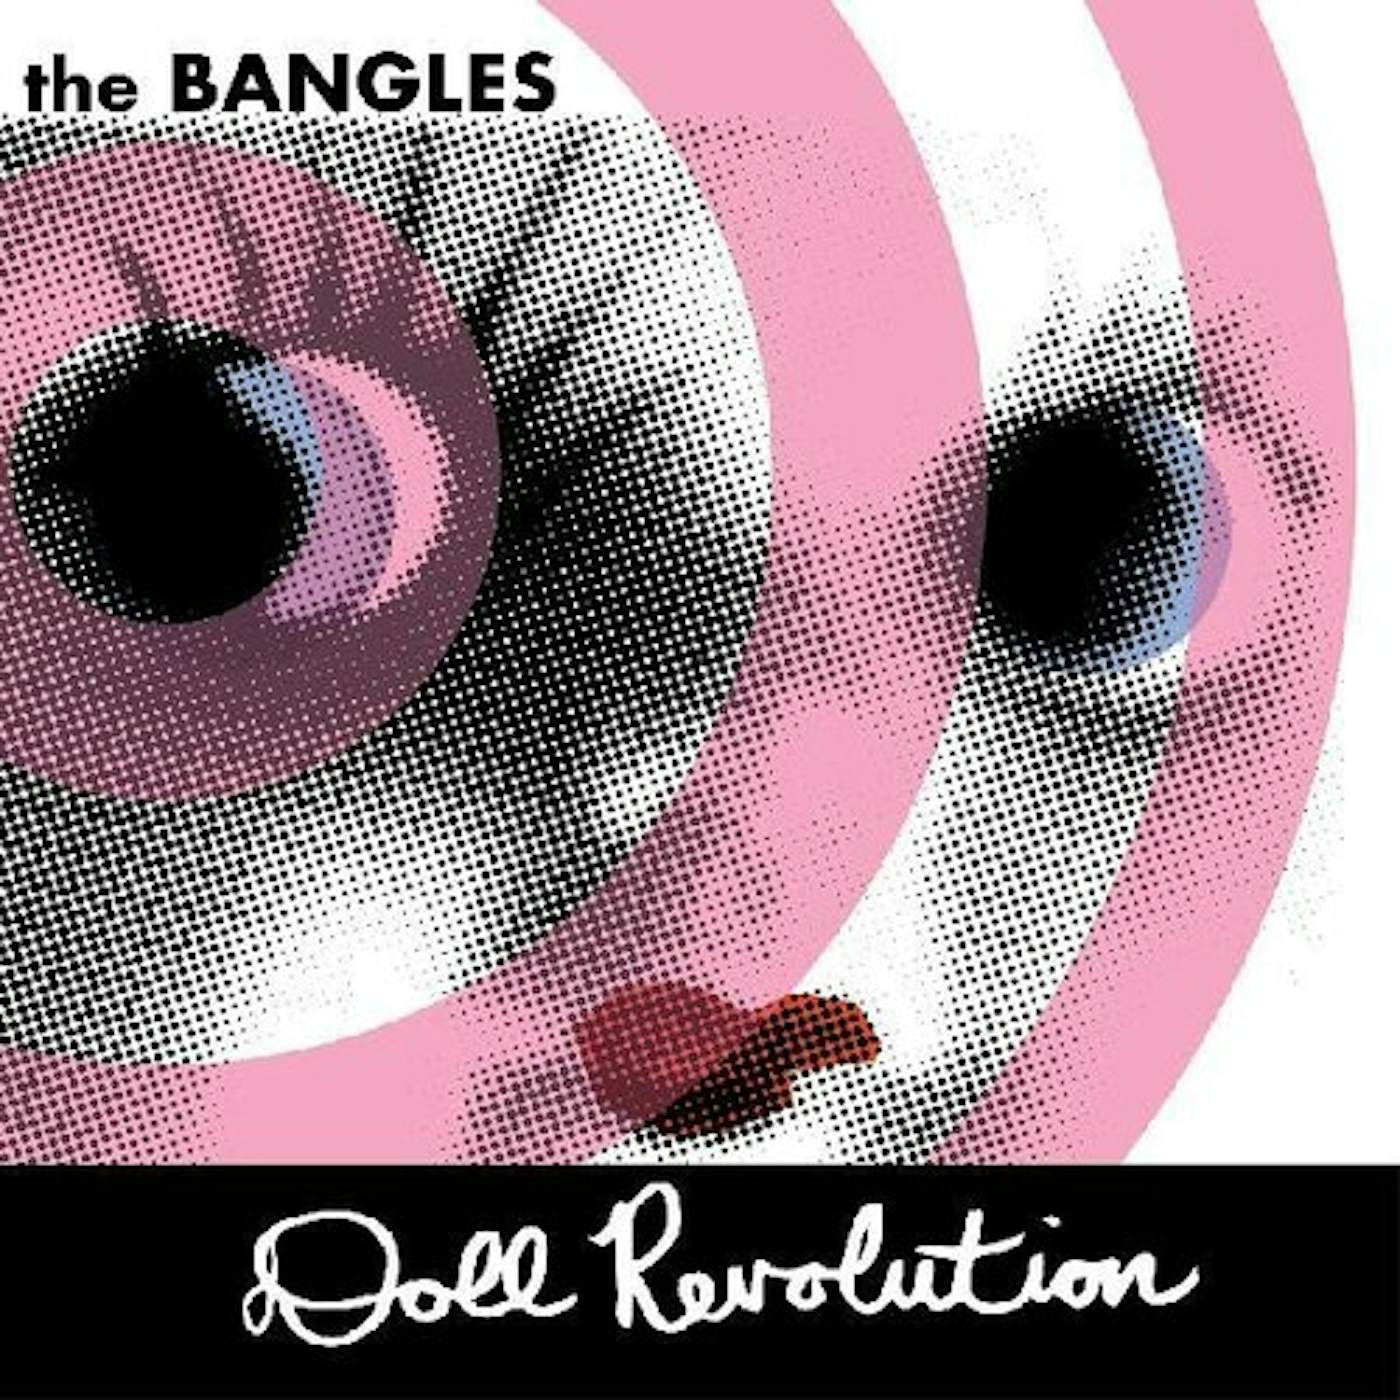 The Bangles Doll Revolution Vinyl Record